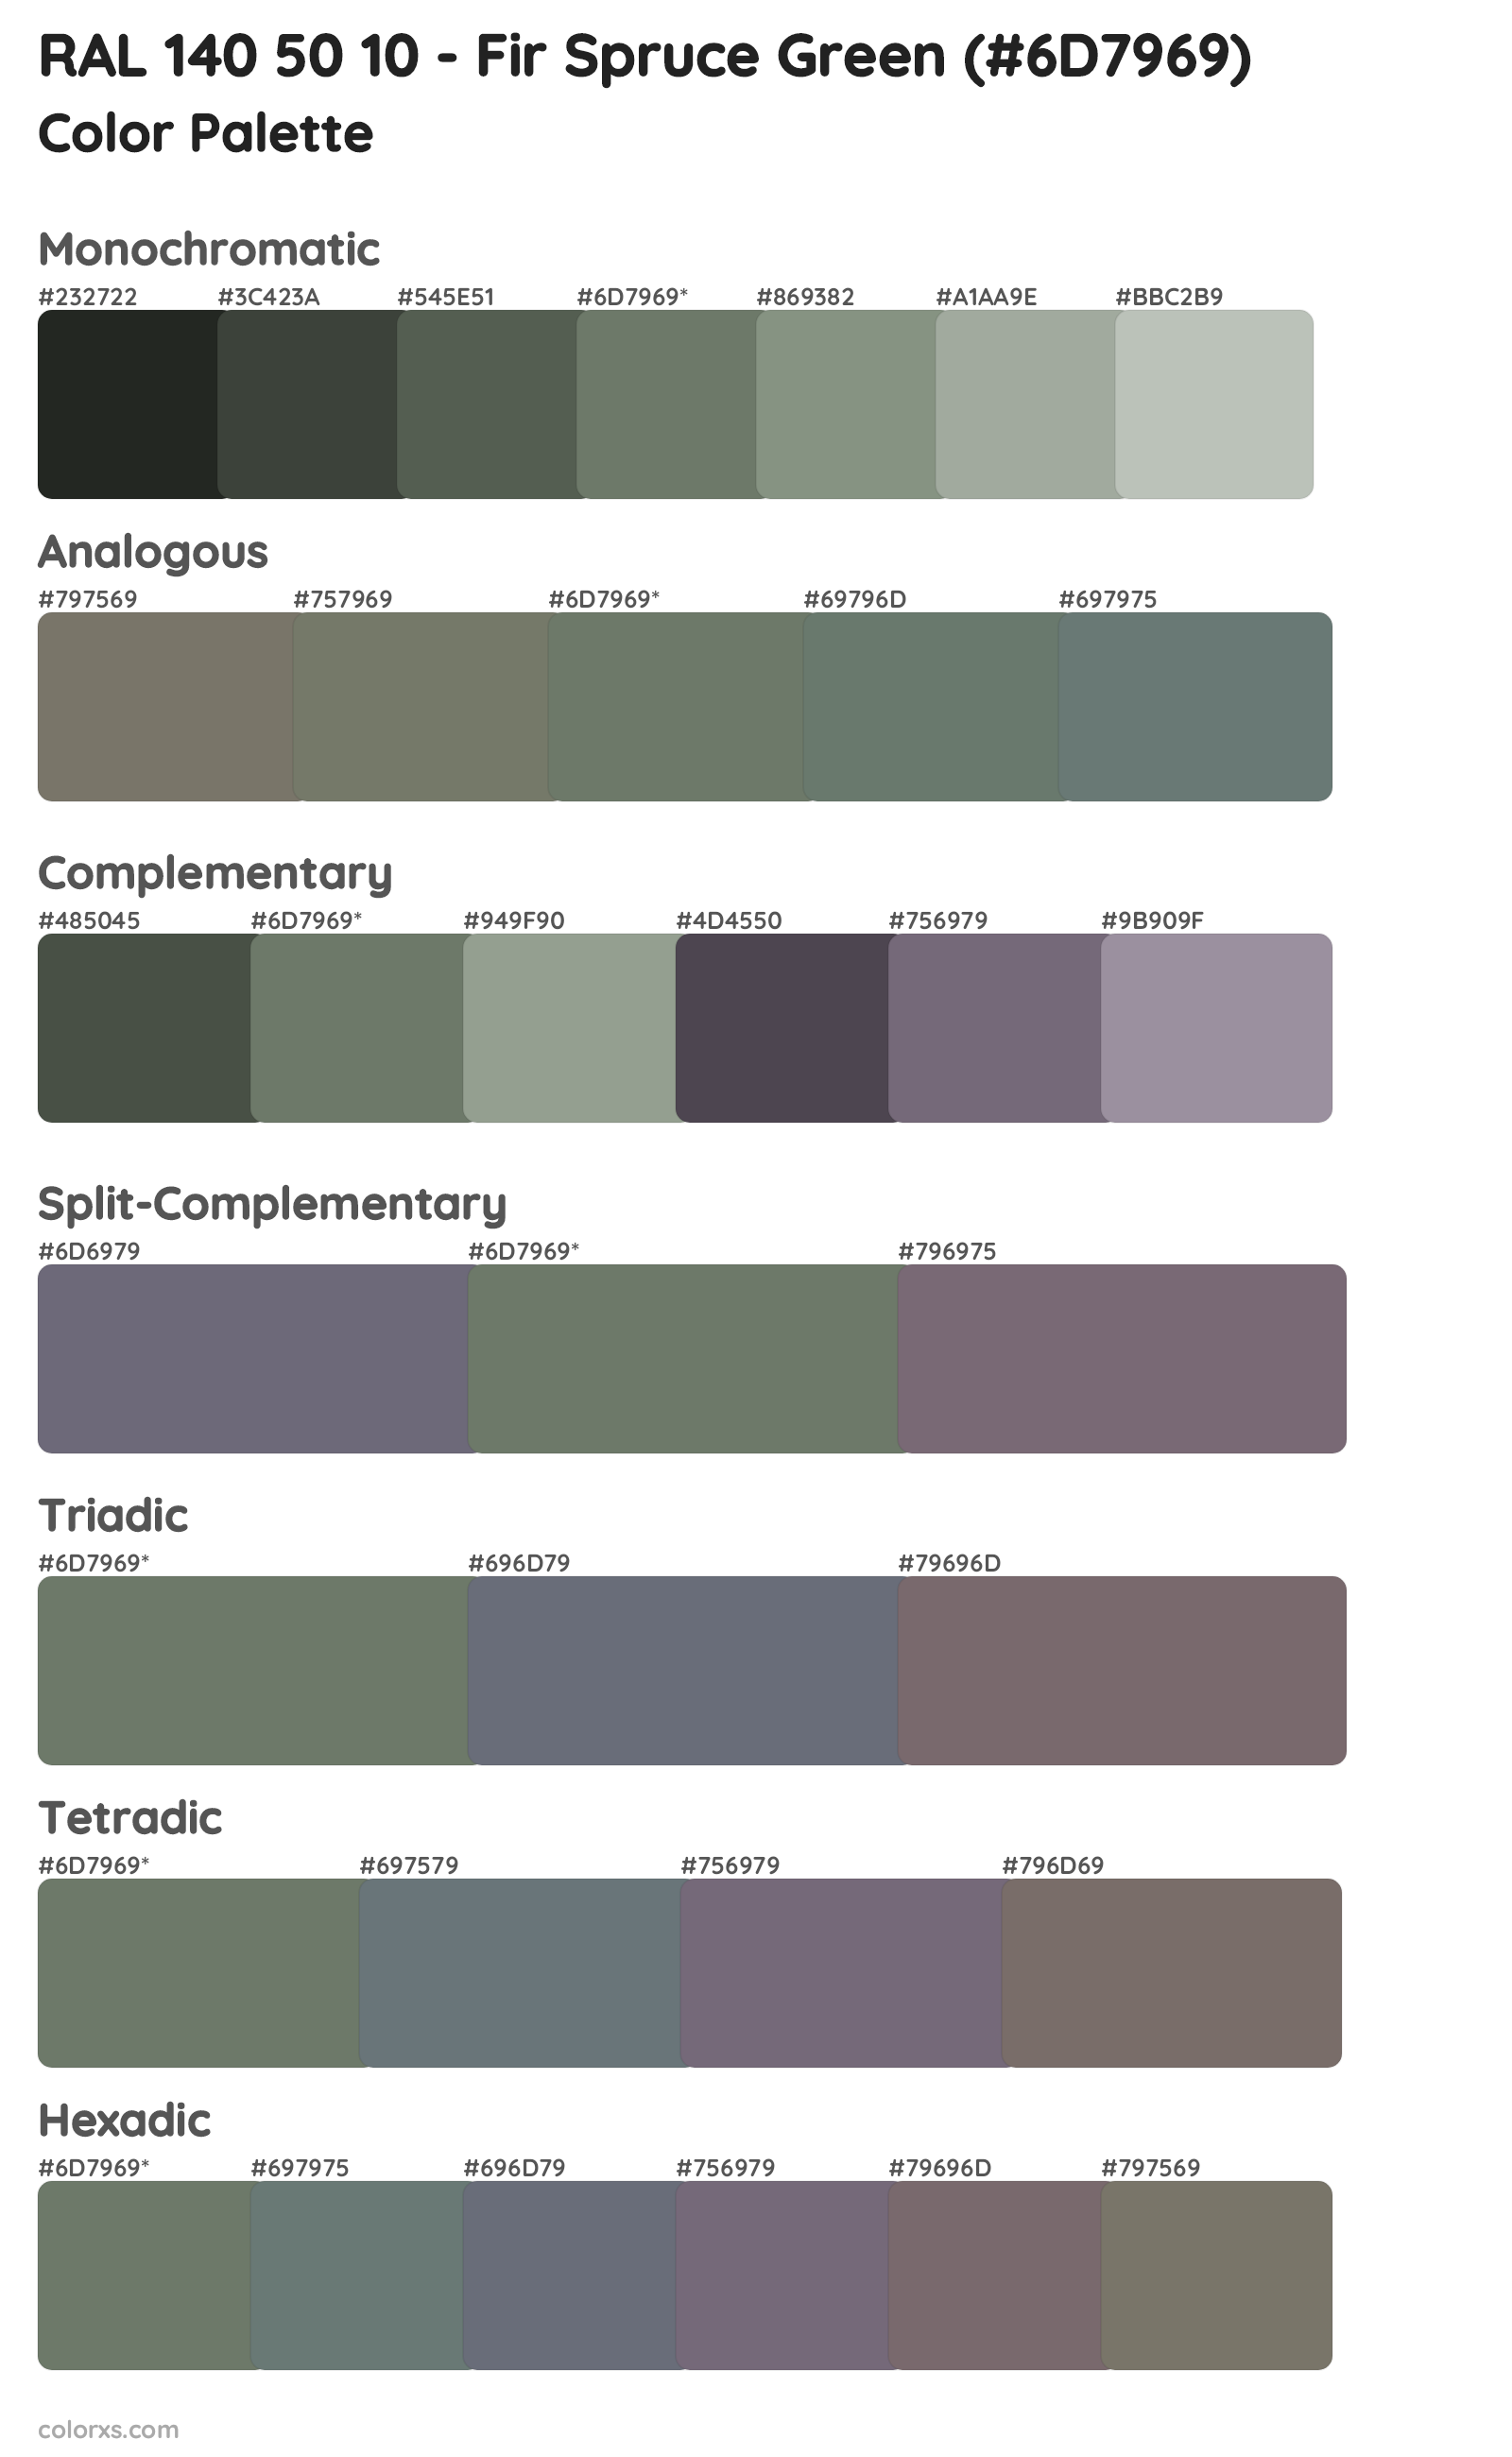 RAL 140 50 10 - Fir Spruce Green Color Scheme Palettes